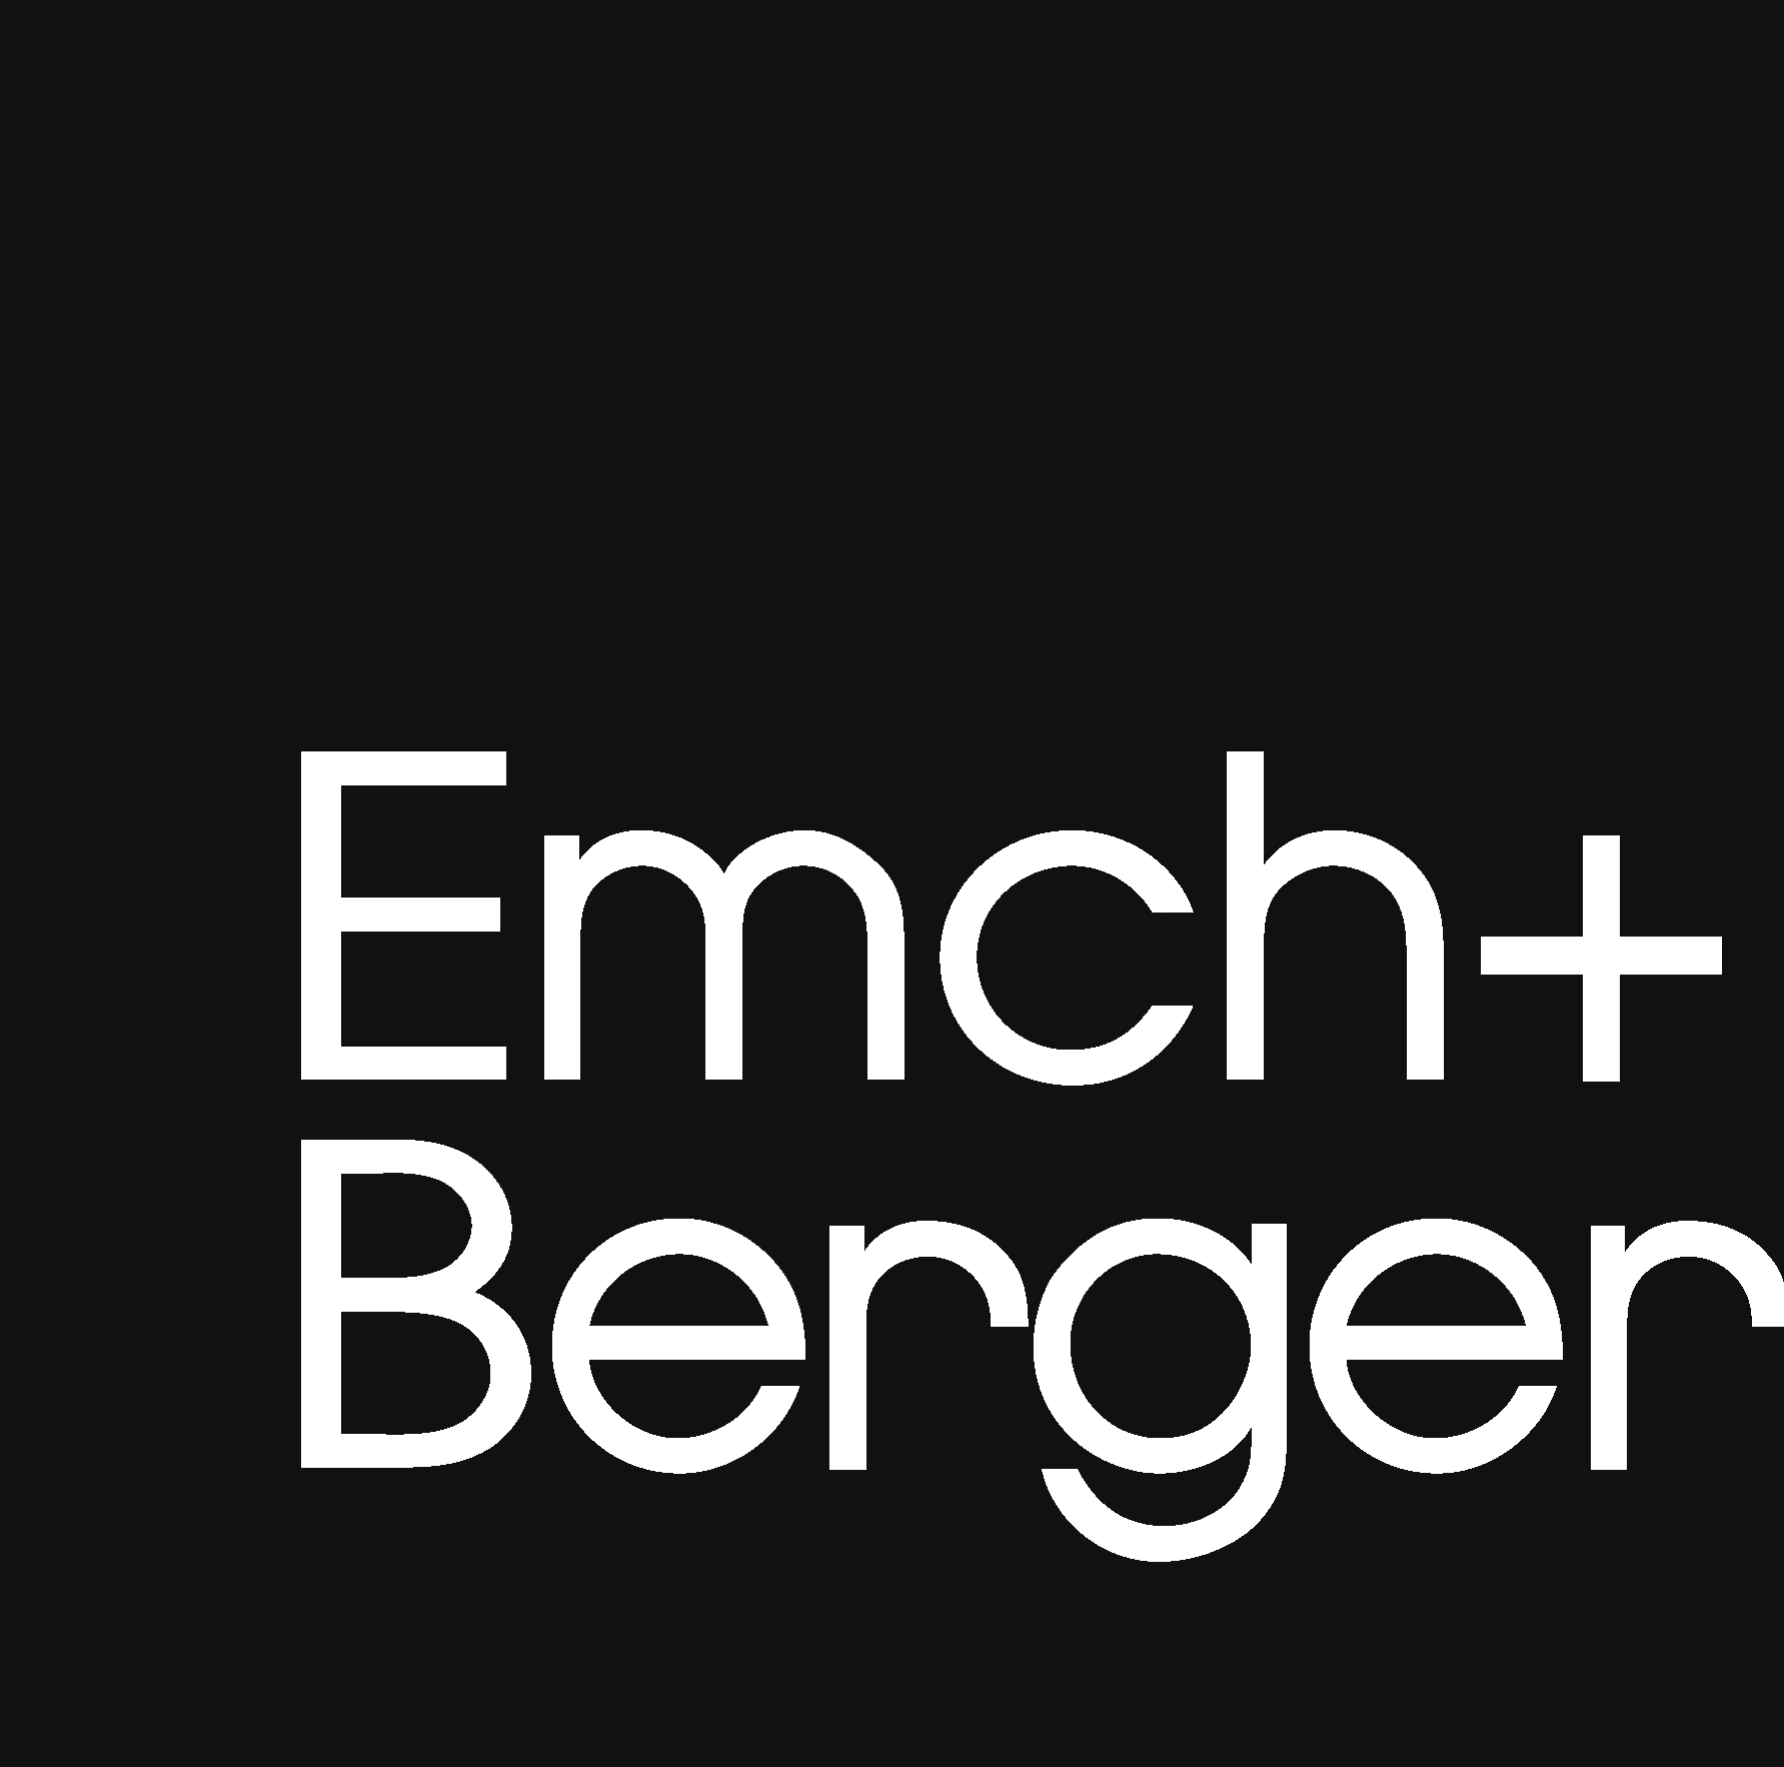 Emch+Berger ImmoConsult AG